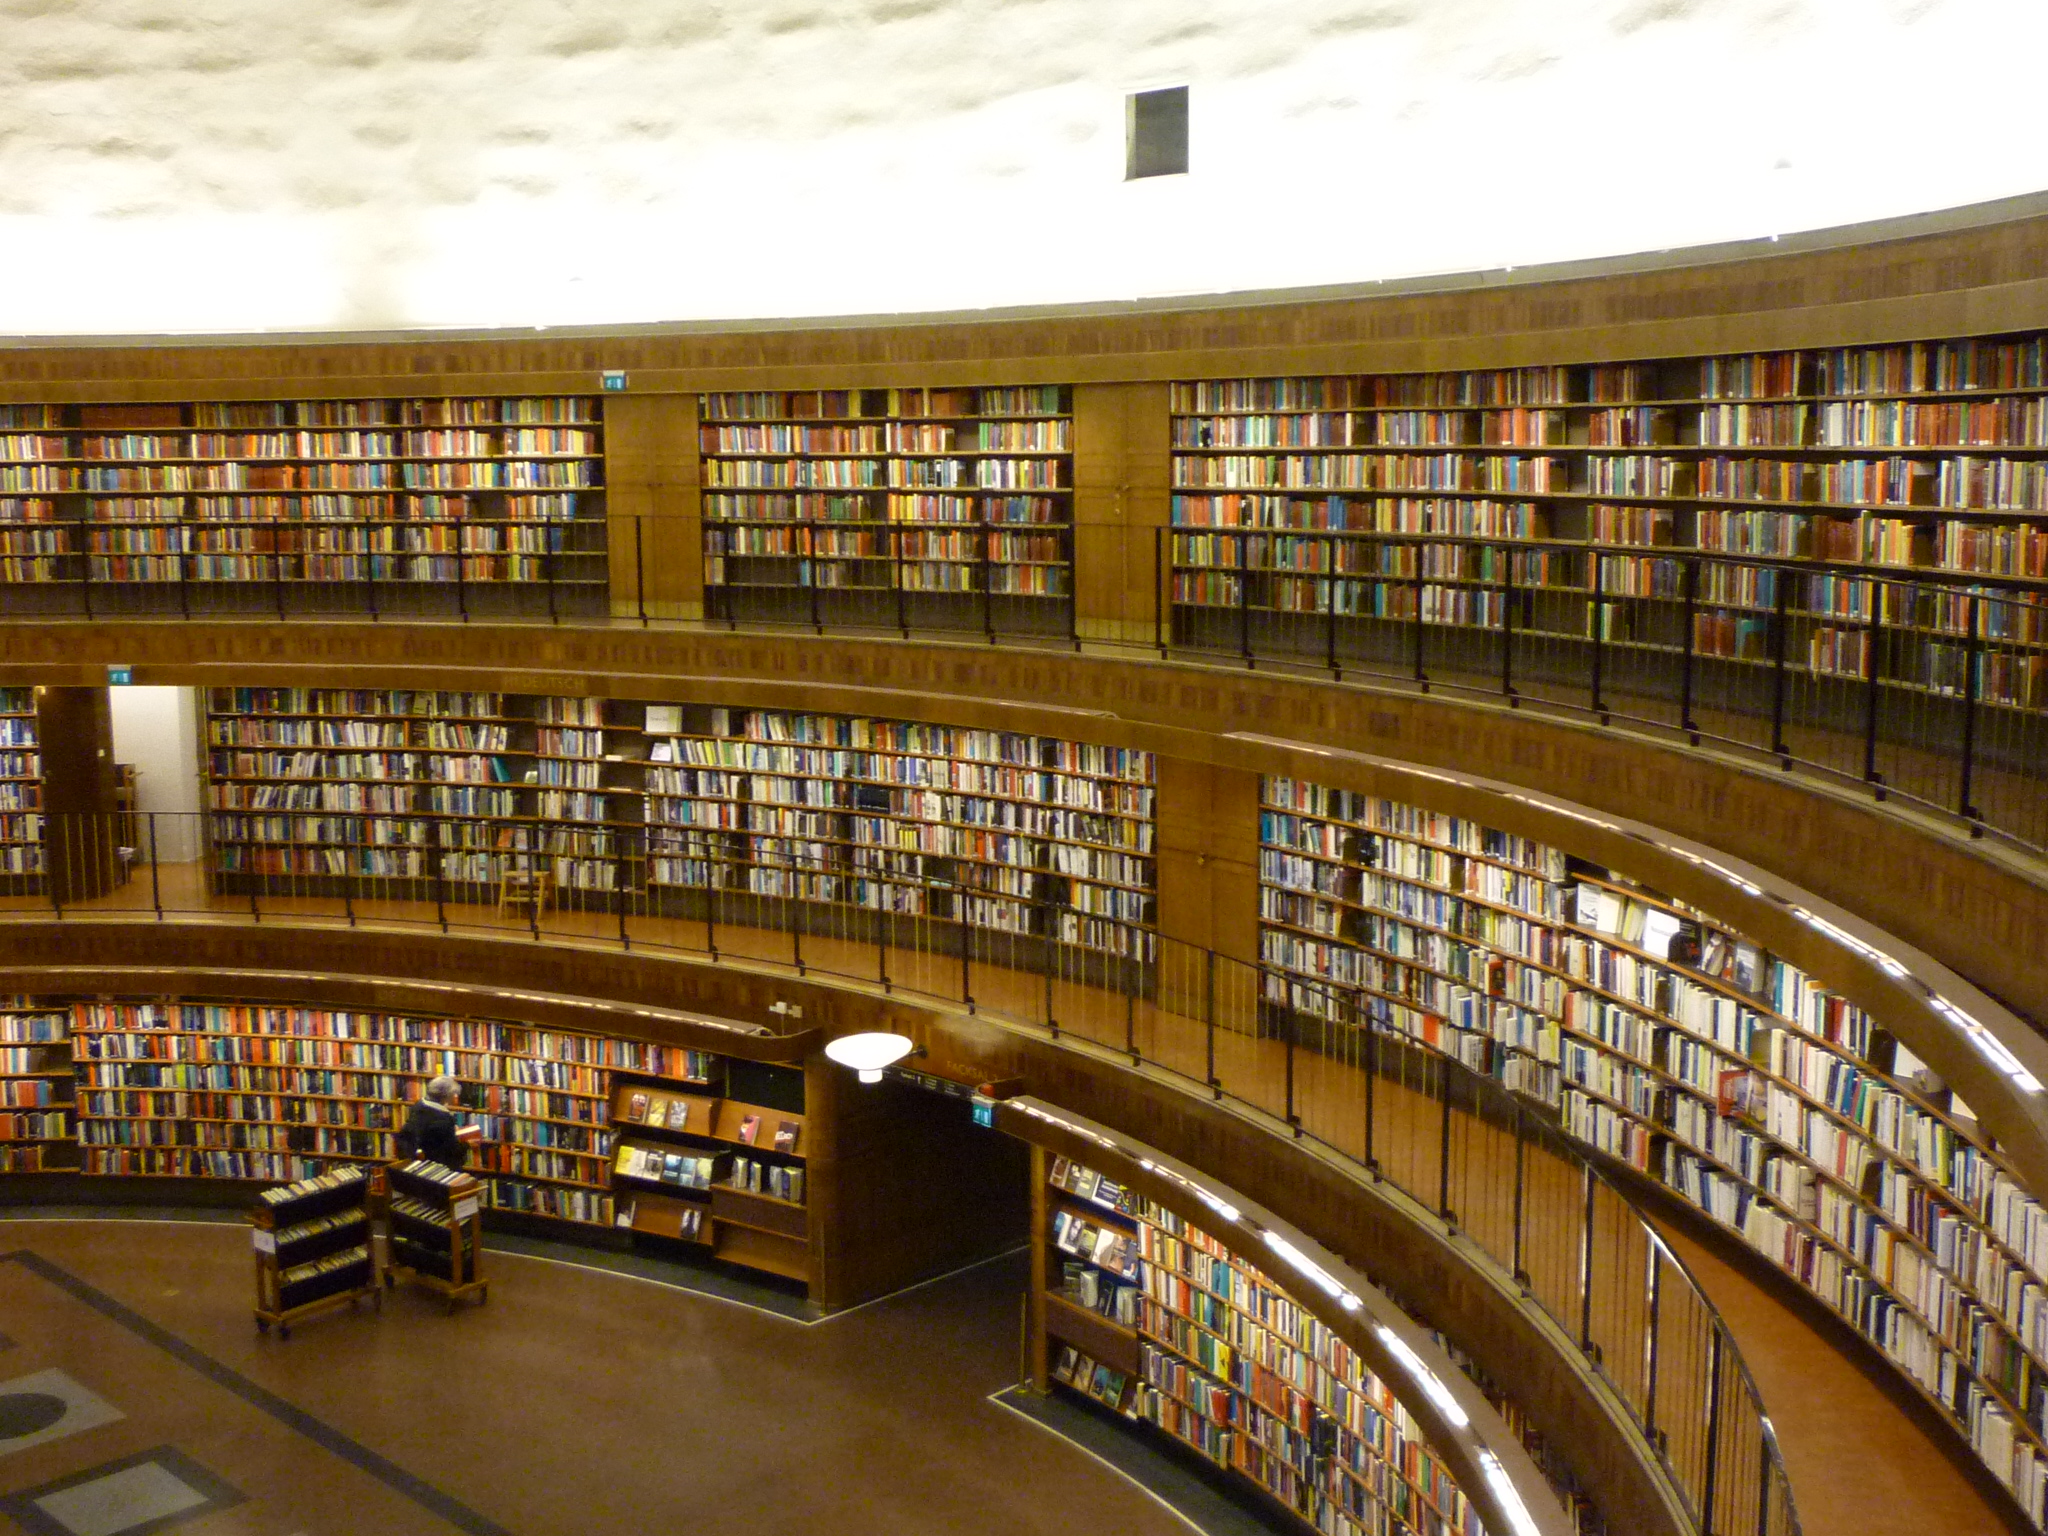 Library 1.7. Лейпциг библиотека. Большая библиотека в Лейпциге. Университет Лейпциг библиотека. Национальная библиотека Германии.